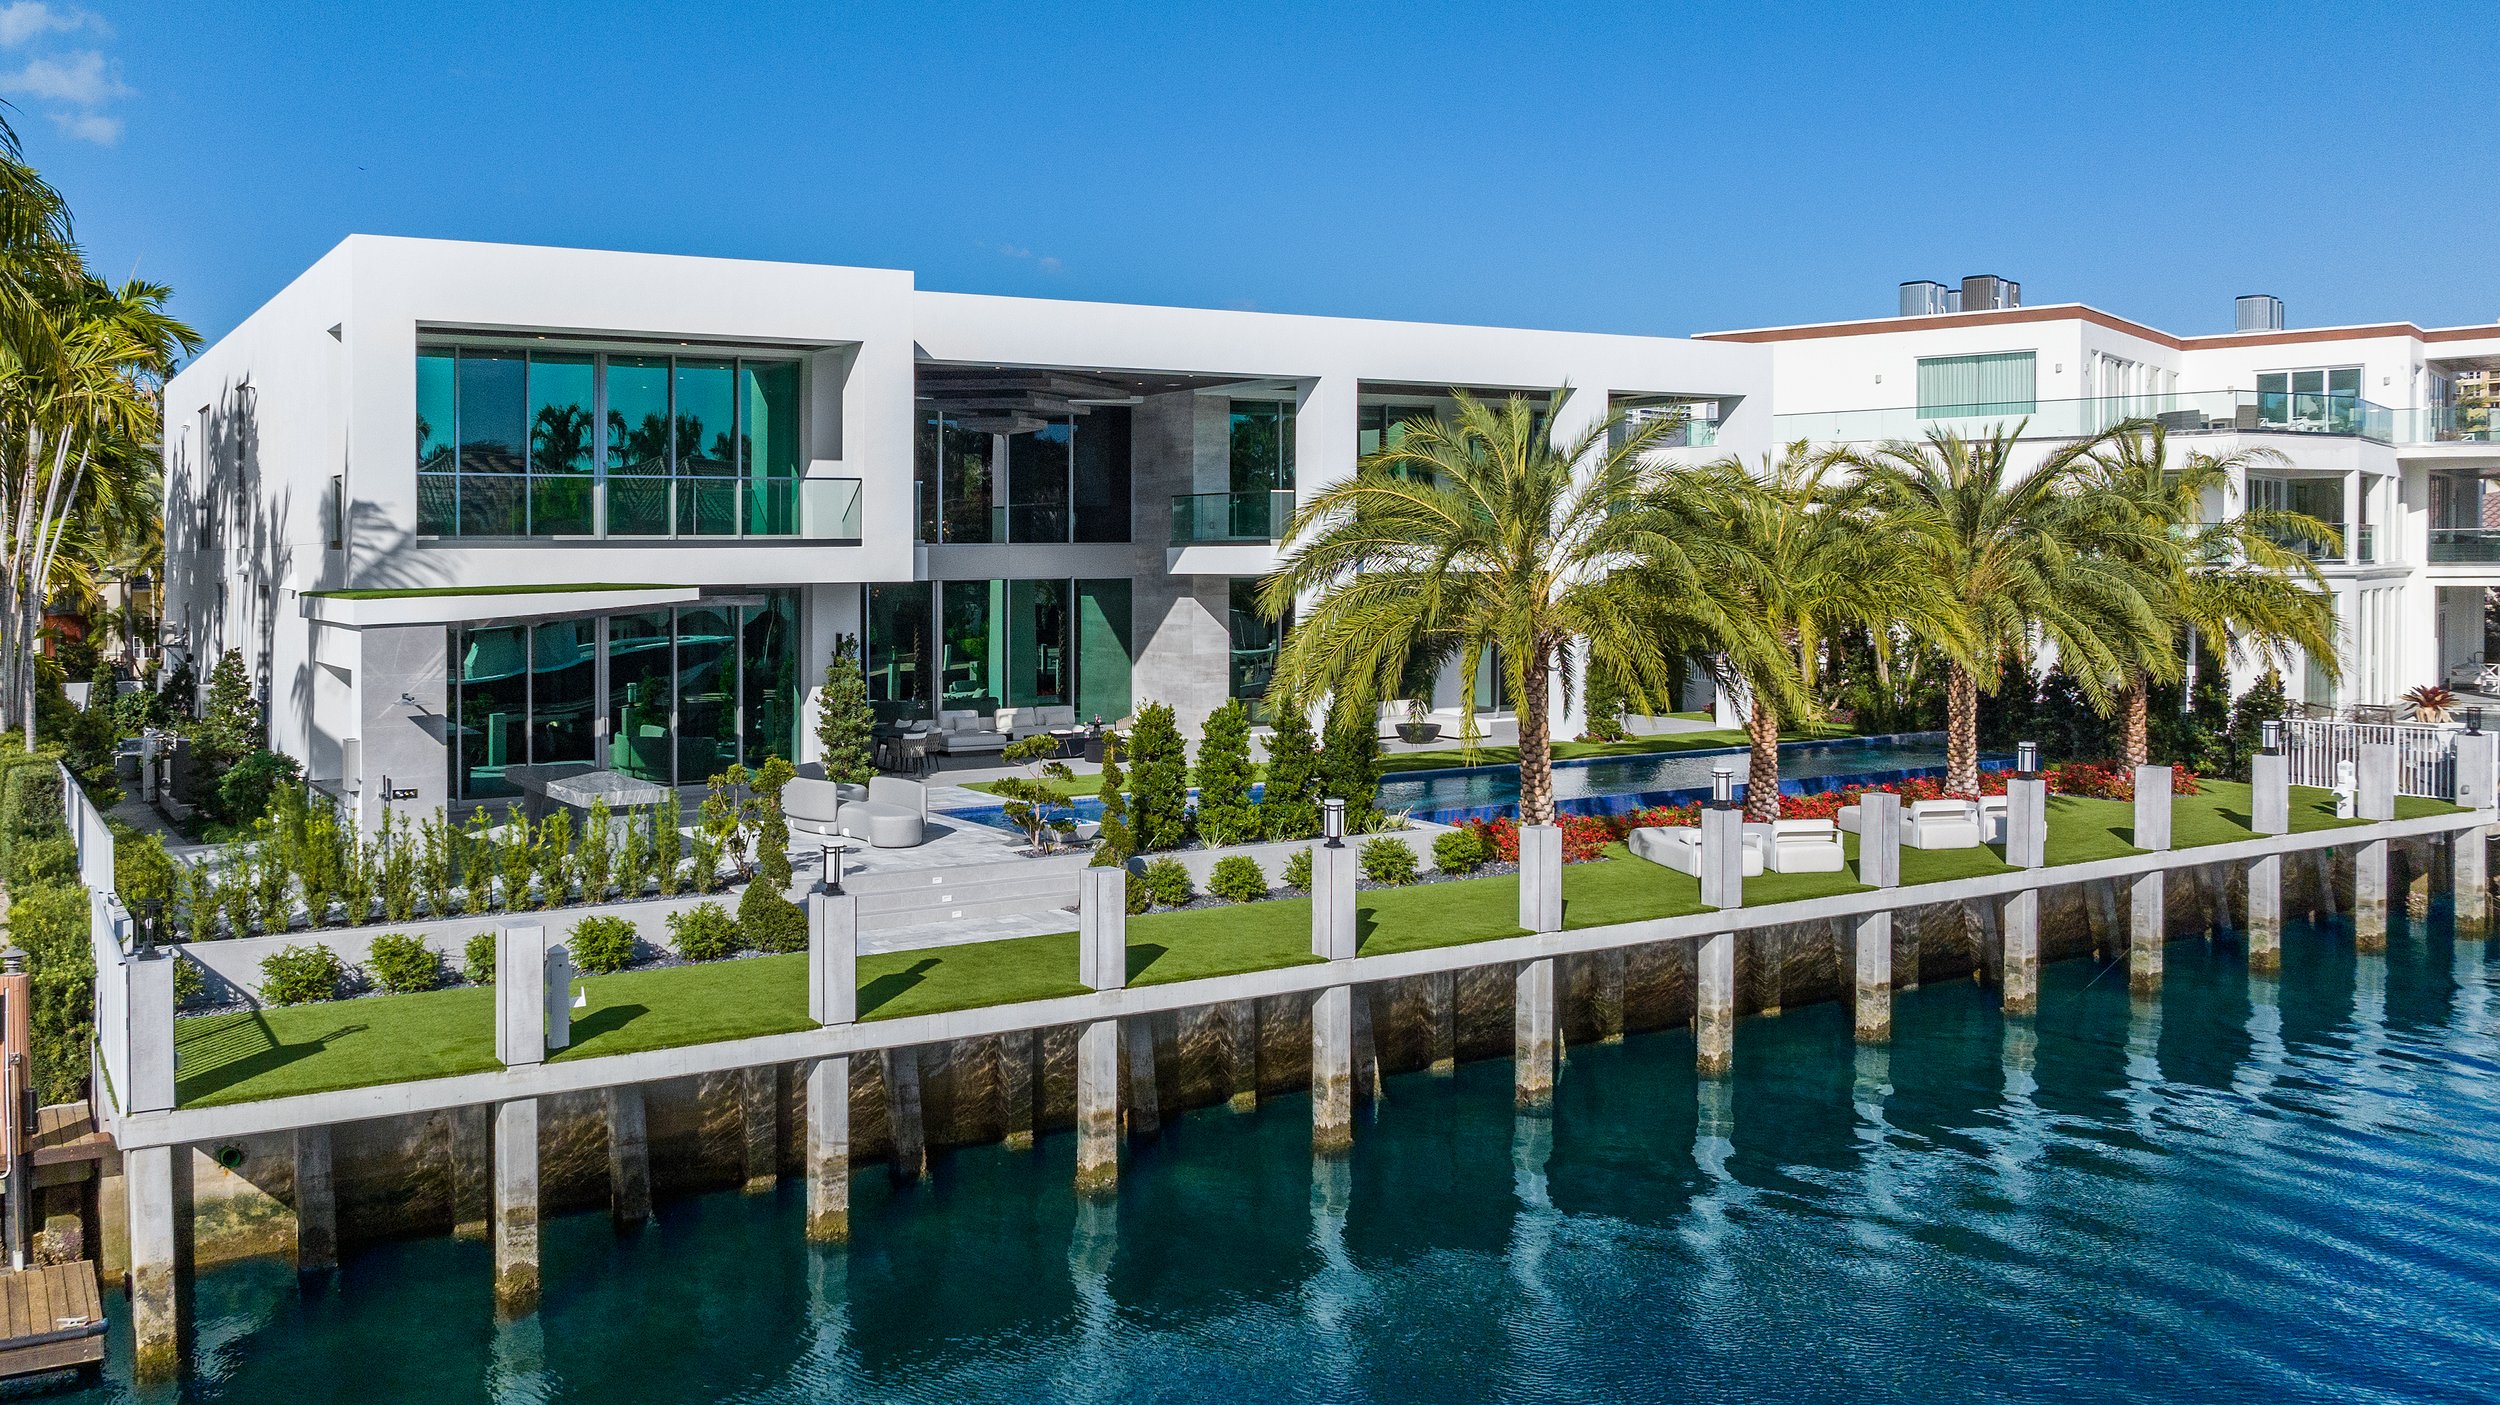 Fort Lauderdale Waterfront Sells For Las Olas Isle Record $14.75 Million 9.jpg